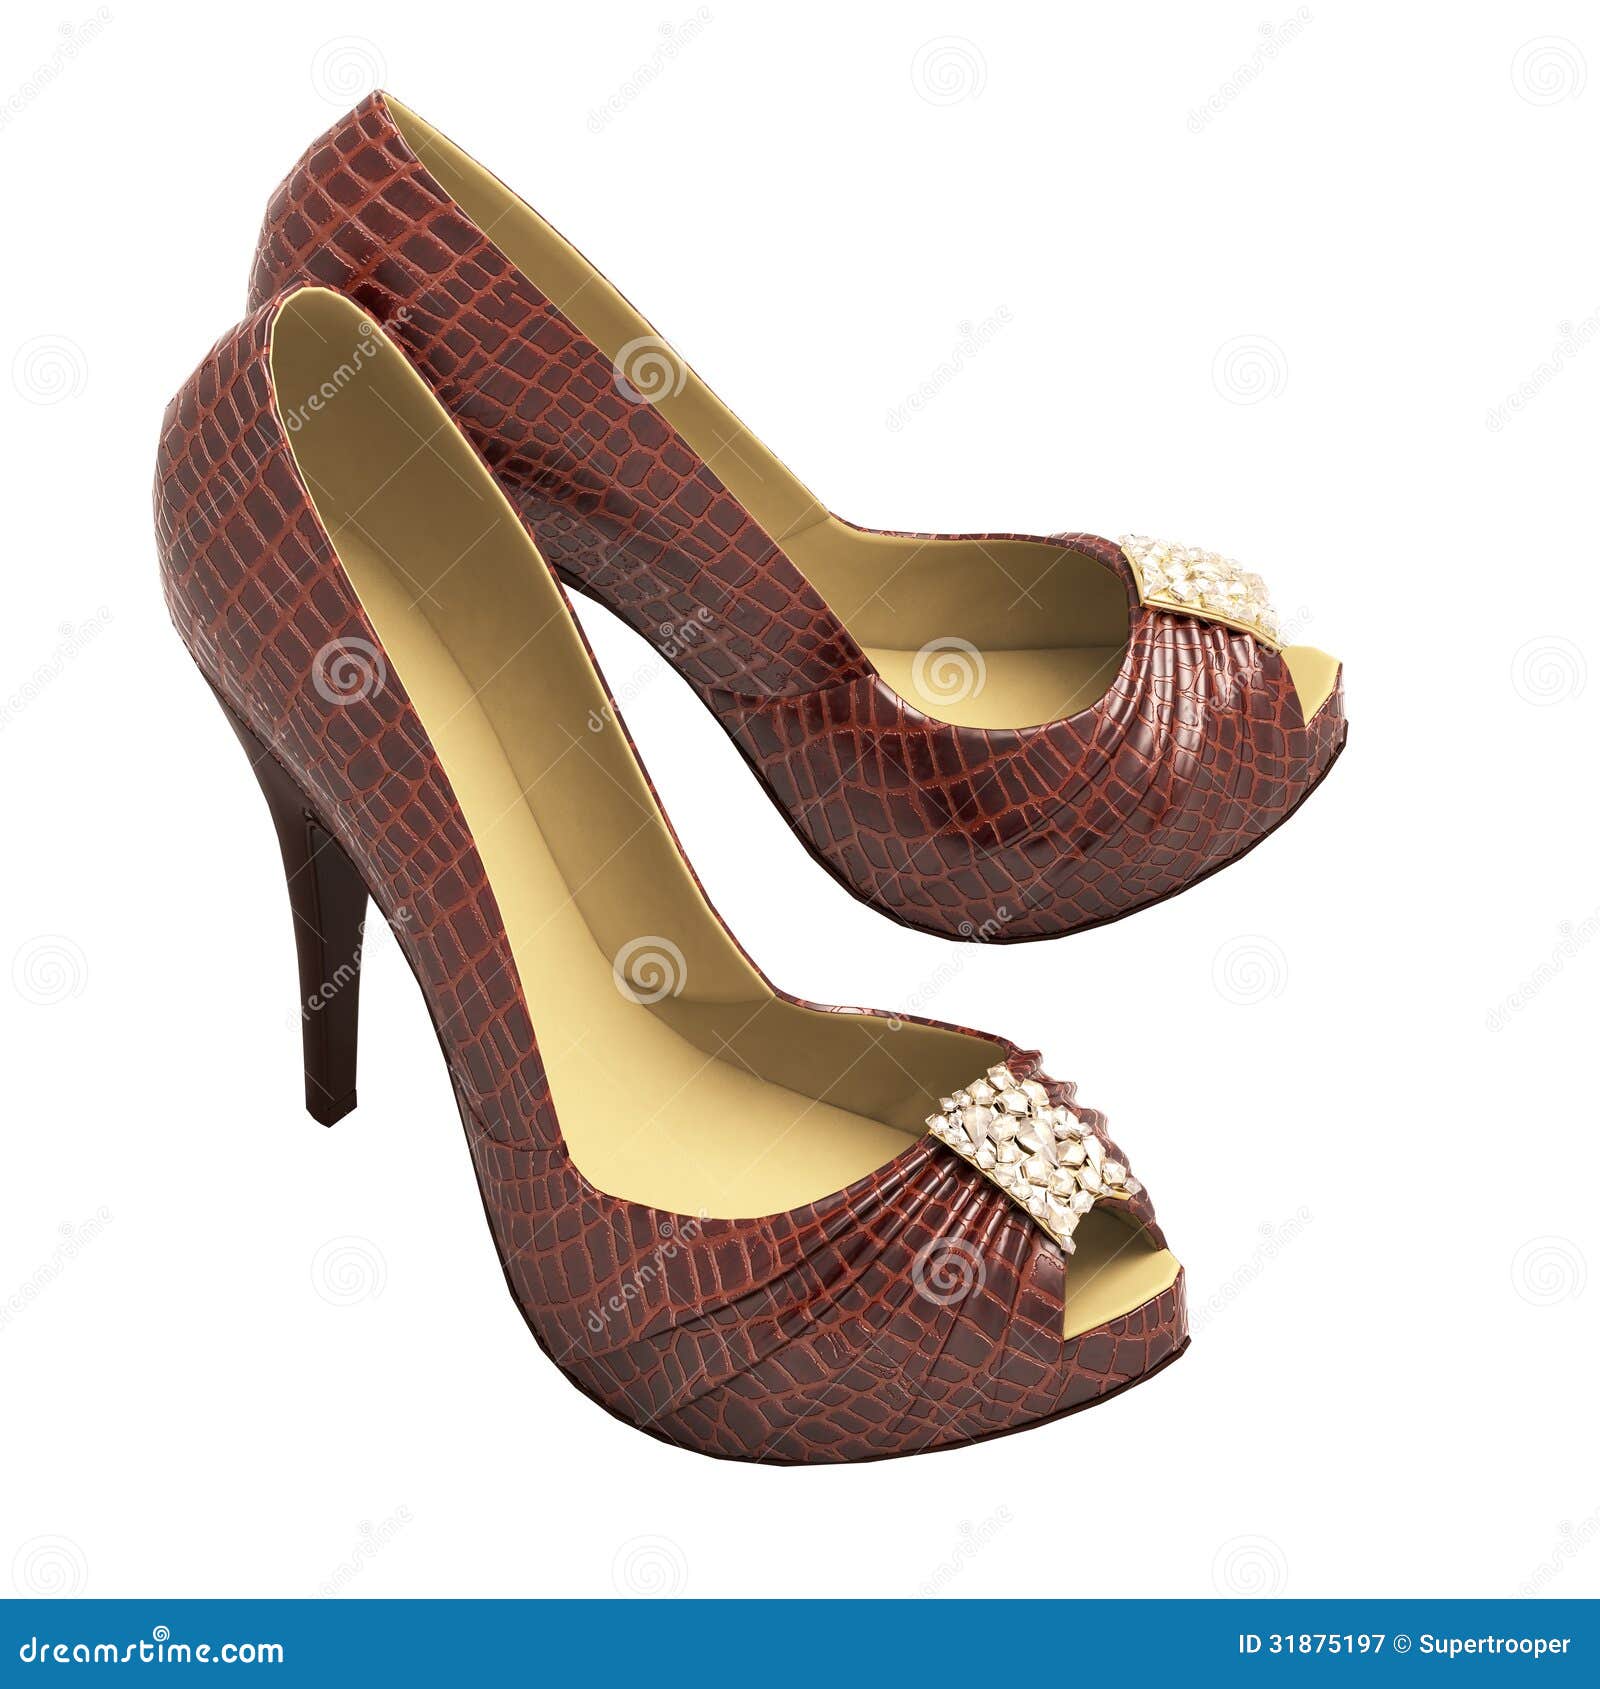 women's crocodile leather shoes